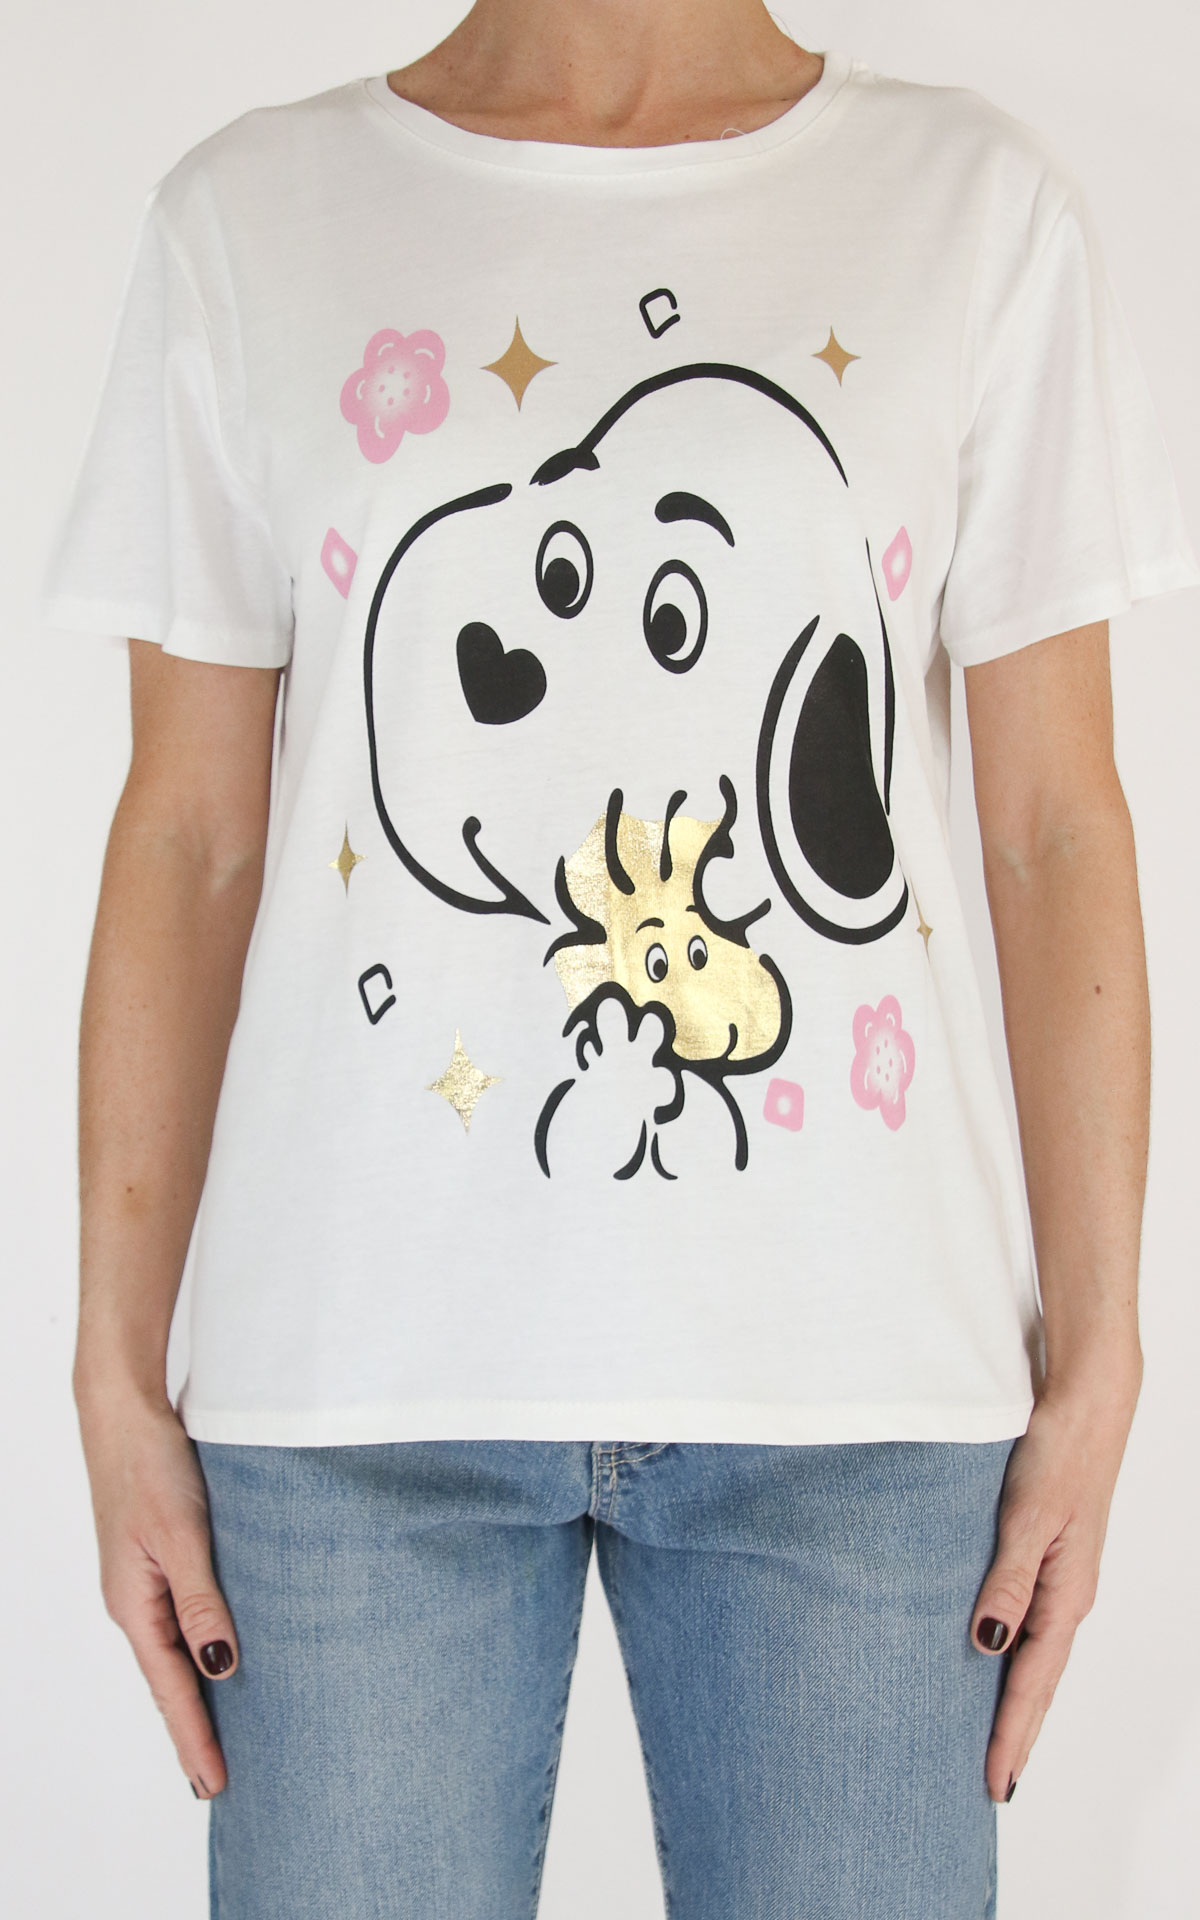 Off-on - T-shirt regular - Snoopy/ woodstock